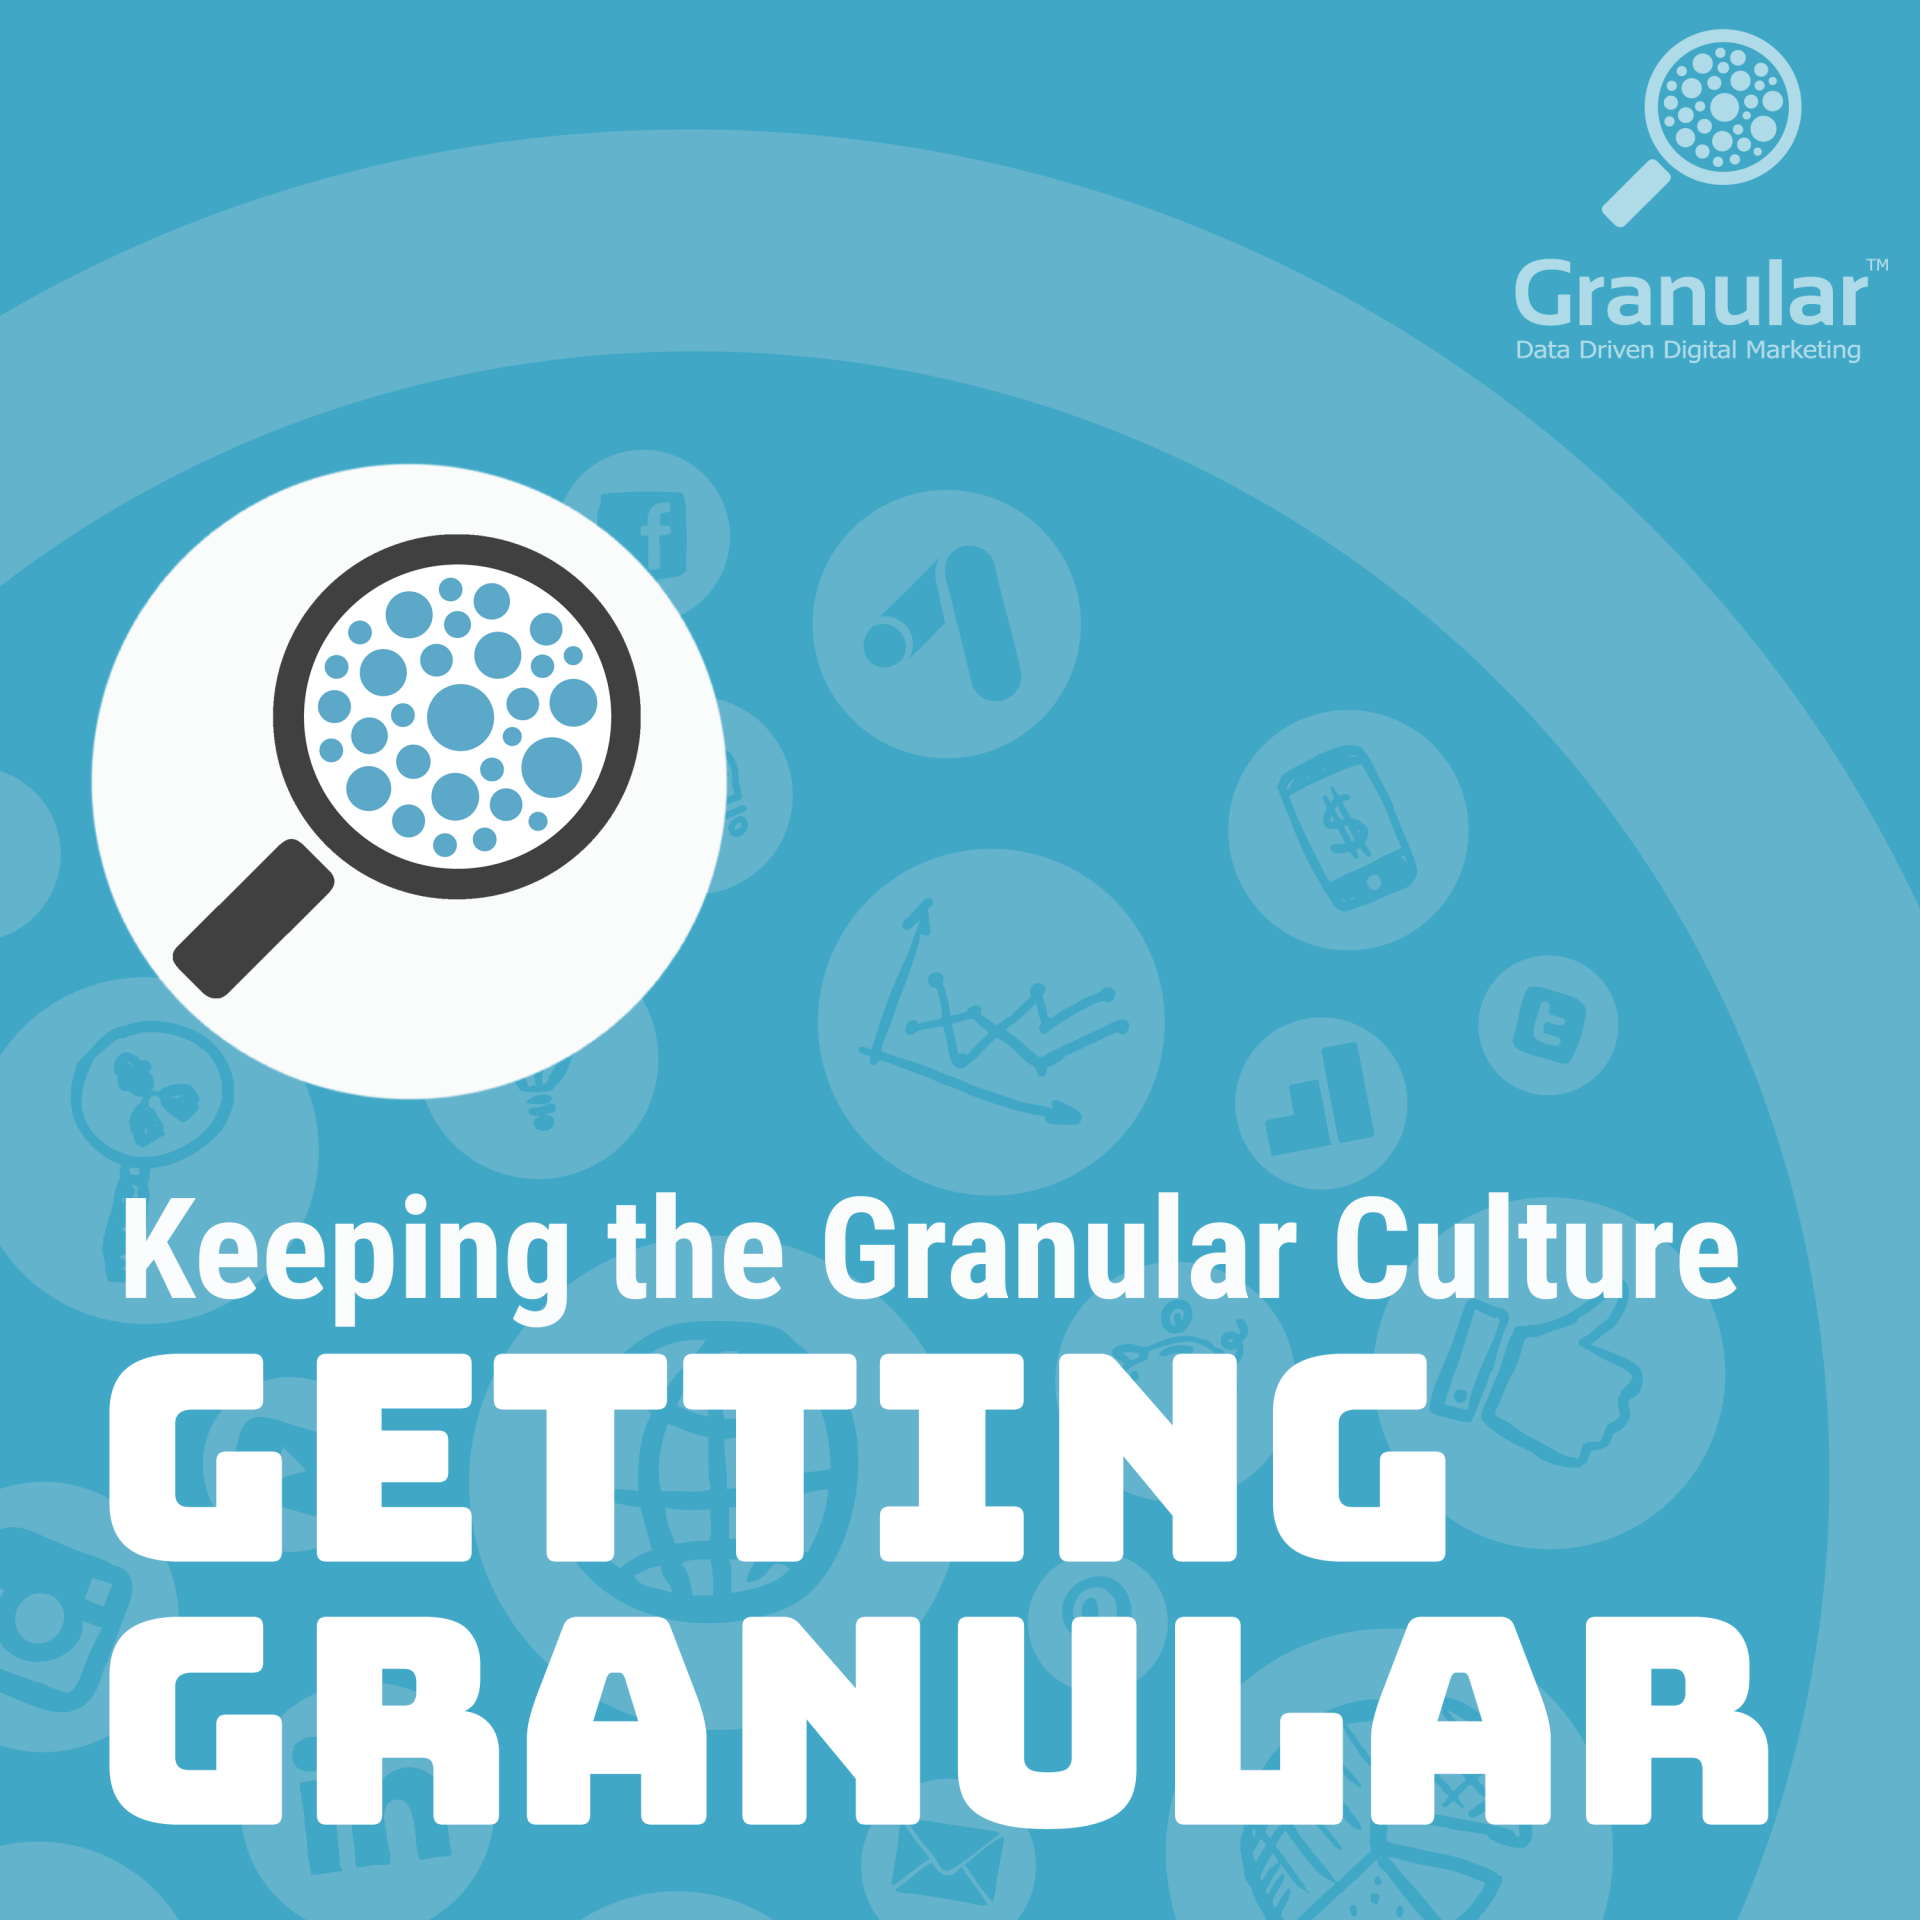 Granular Podcast: Getting Granular - Keeping the Granular Culture